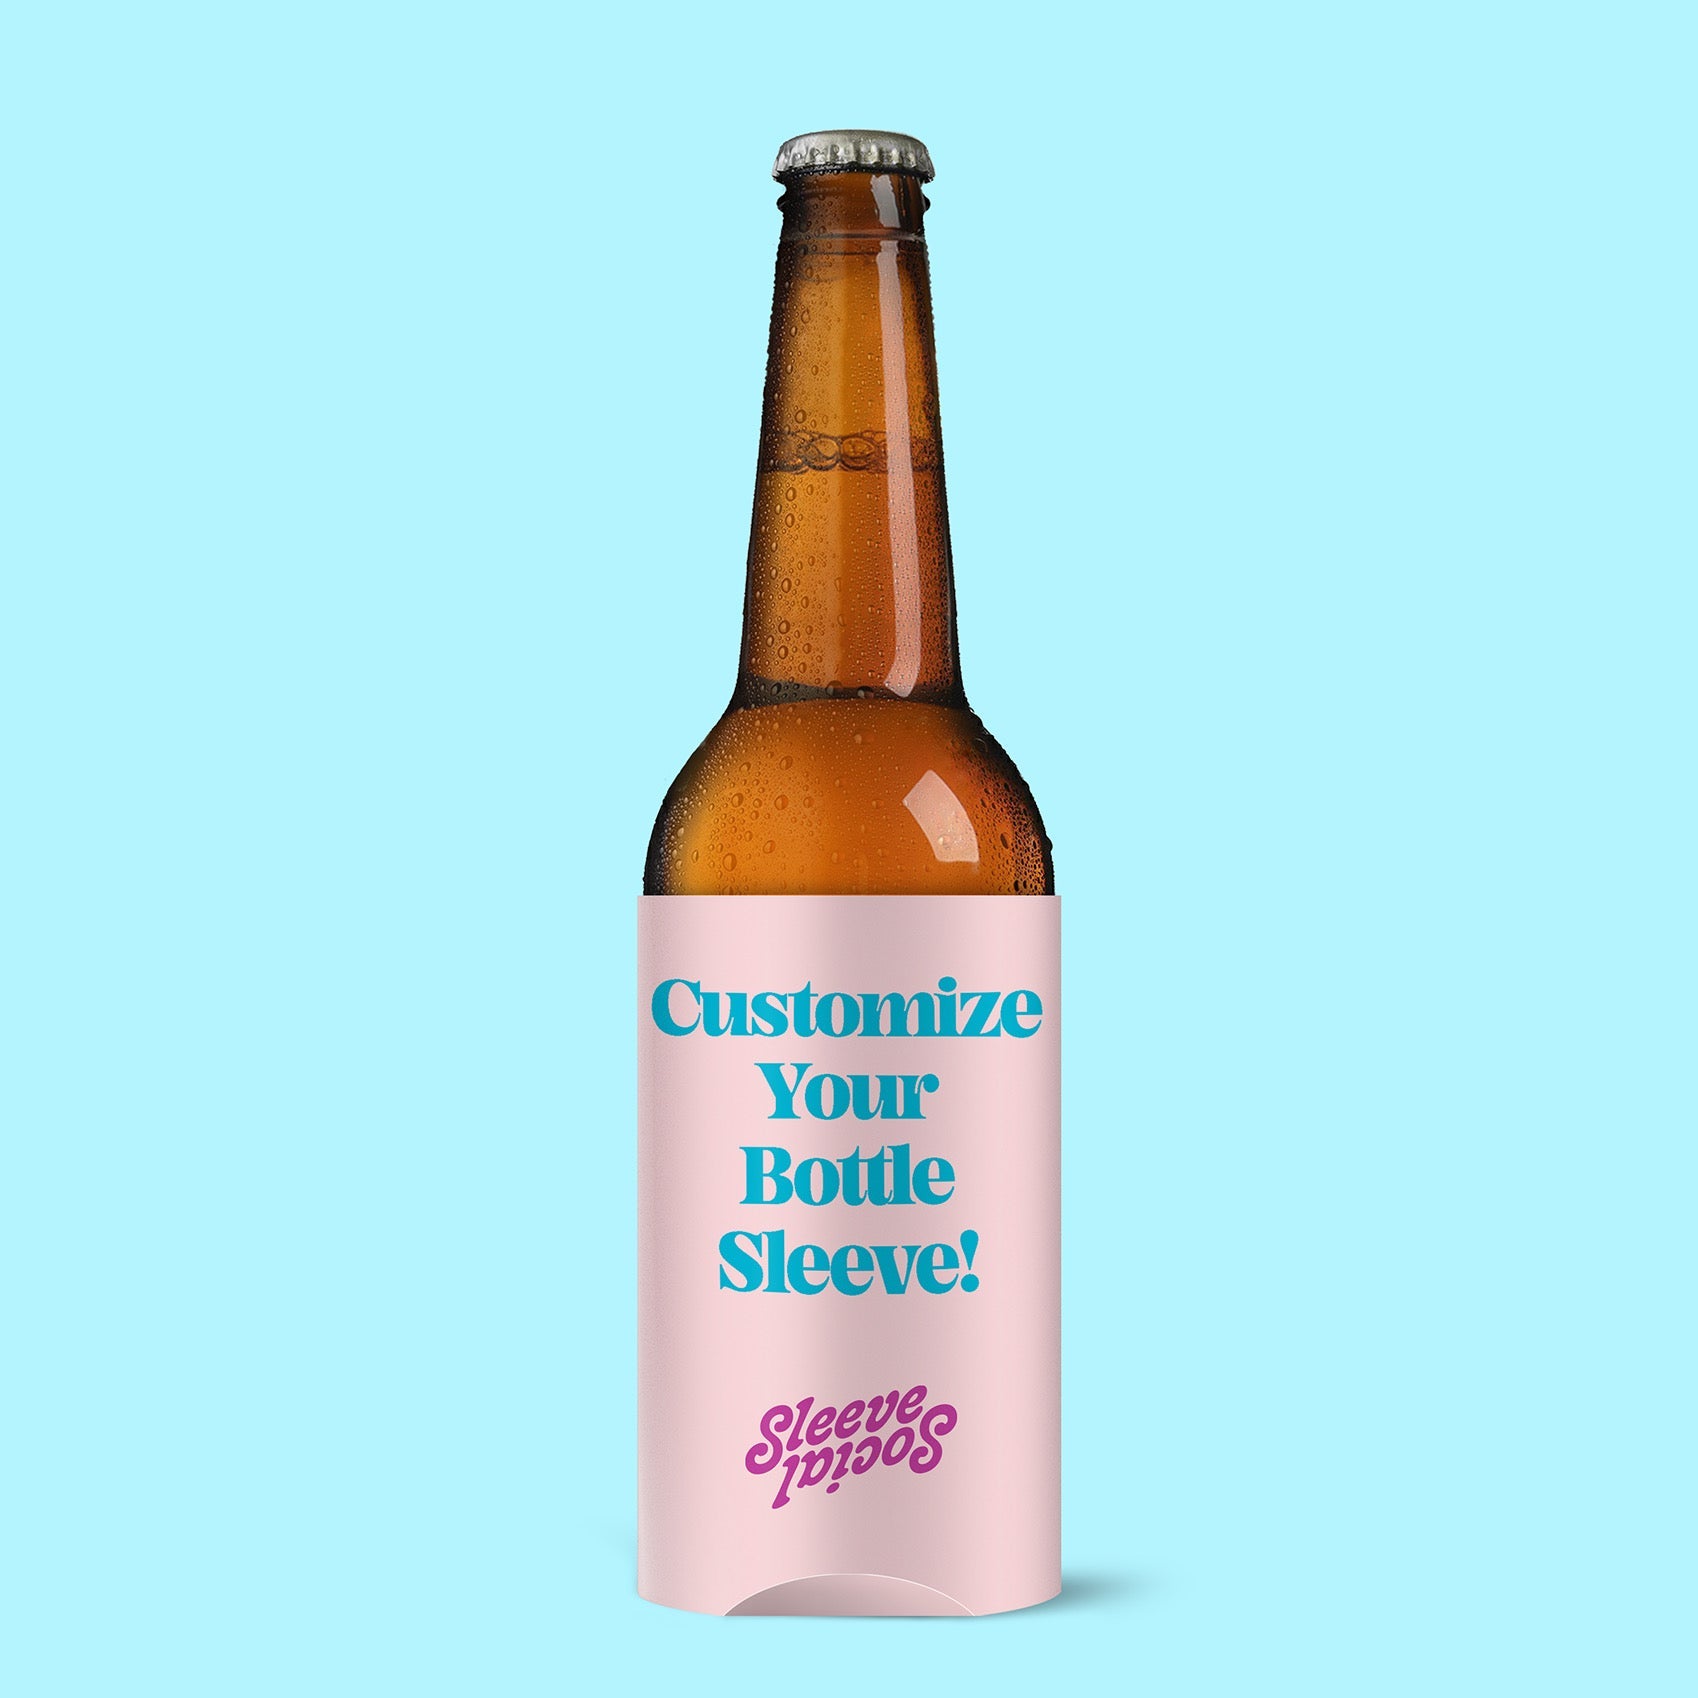 Customize Your Bottle Social Sleeve!